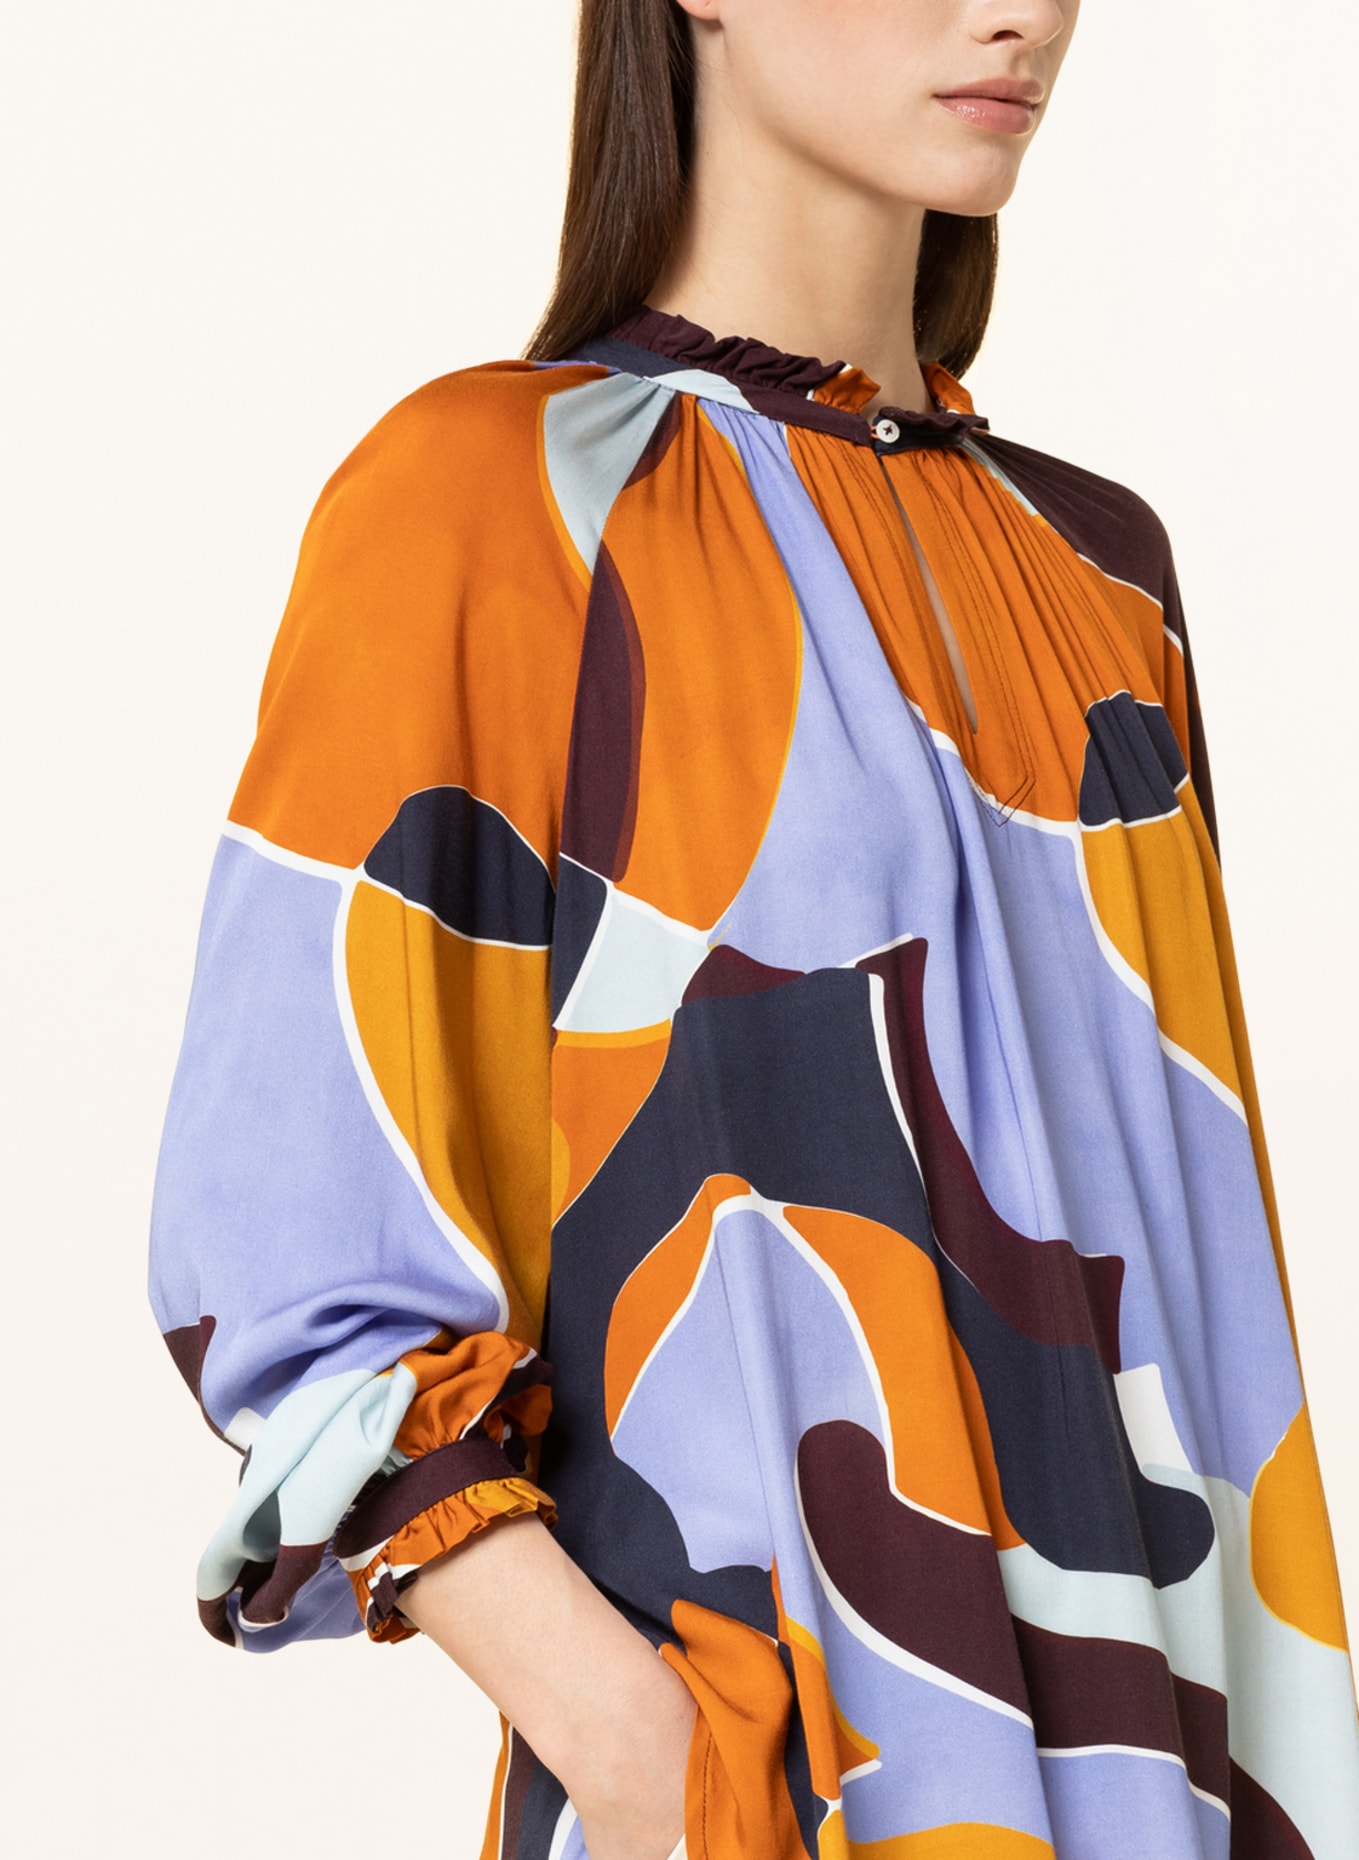 TONNO & PANNA Blouse-style shirt HERMINE with ruffles, Color: DARK BROWN/ LIGHT BLUE/ ORANGE (Image 4)